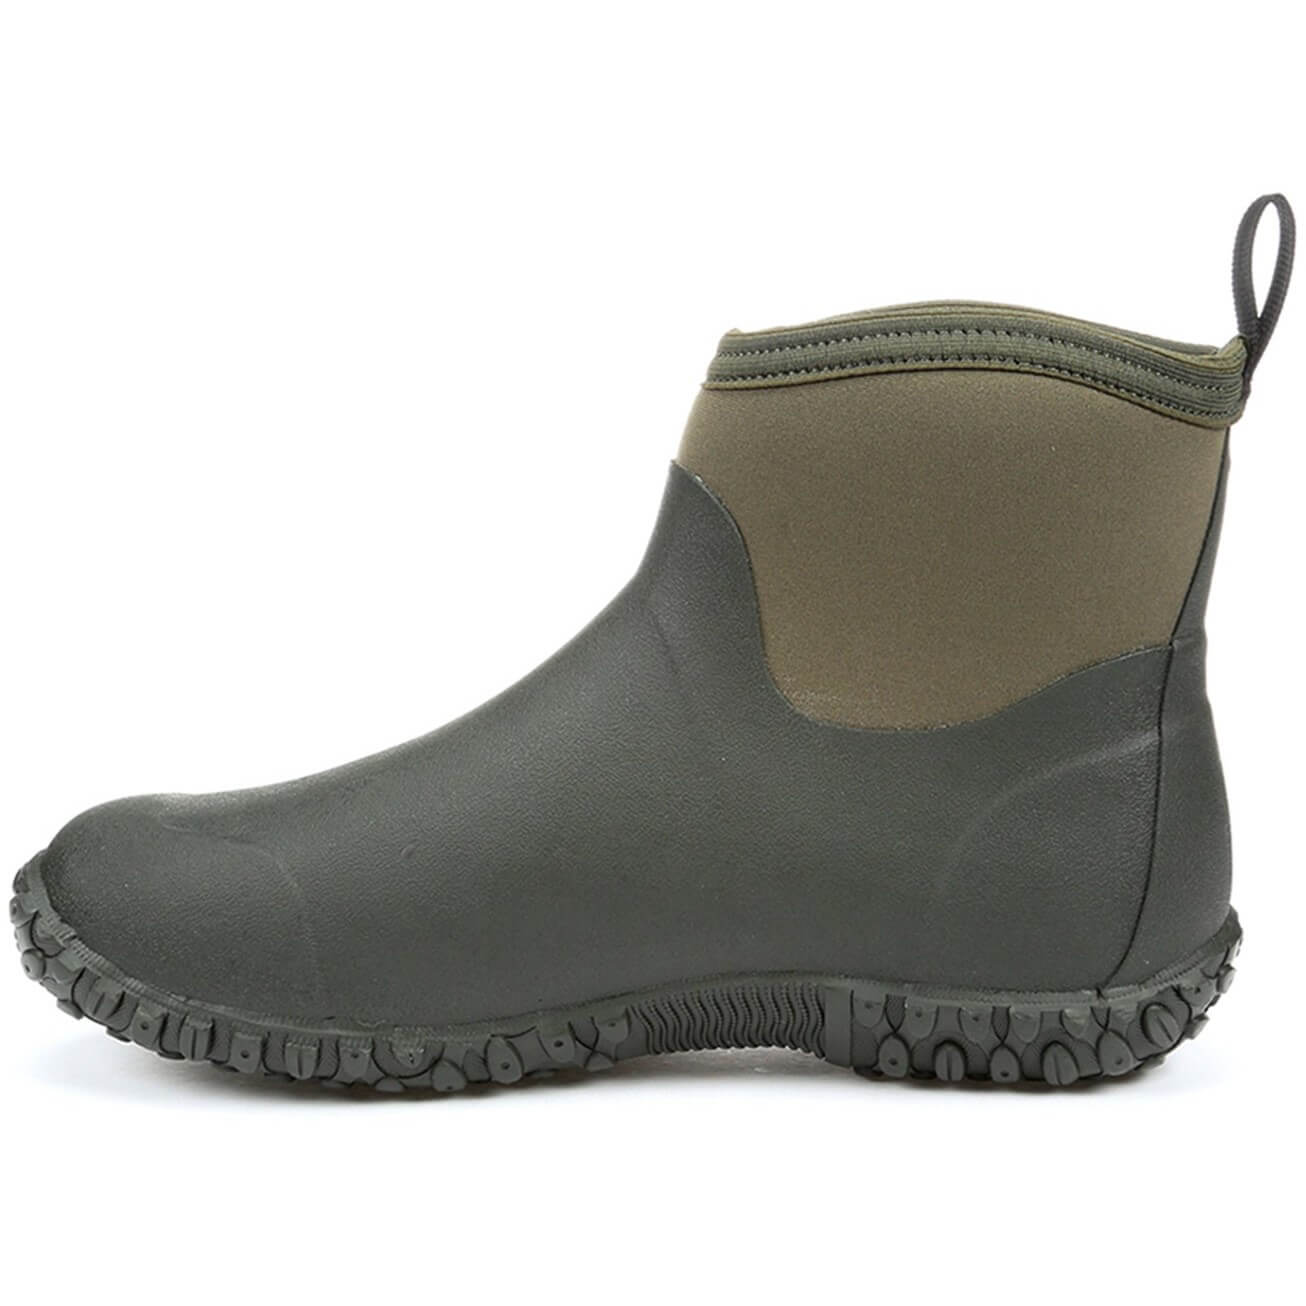 Muck Boots Muckster II Ankle All Purpose Lightweight Shoes Black/Moss 7#colour_black-moss